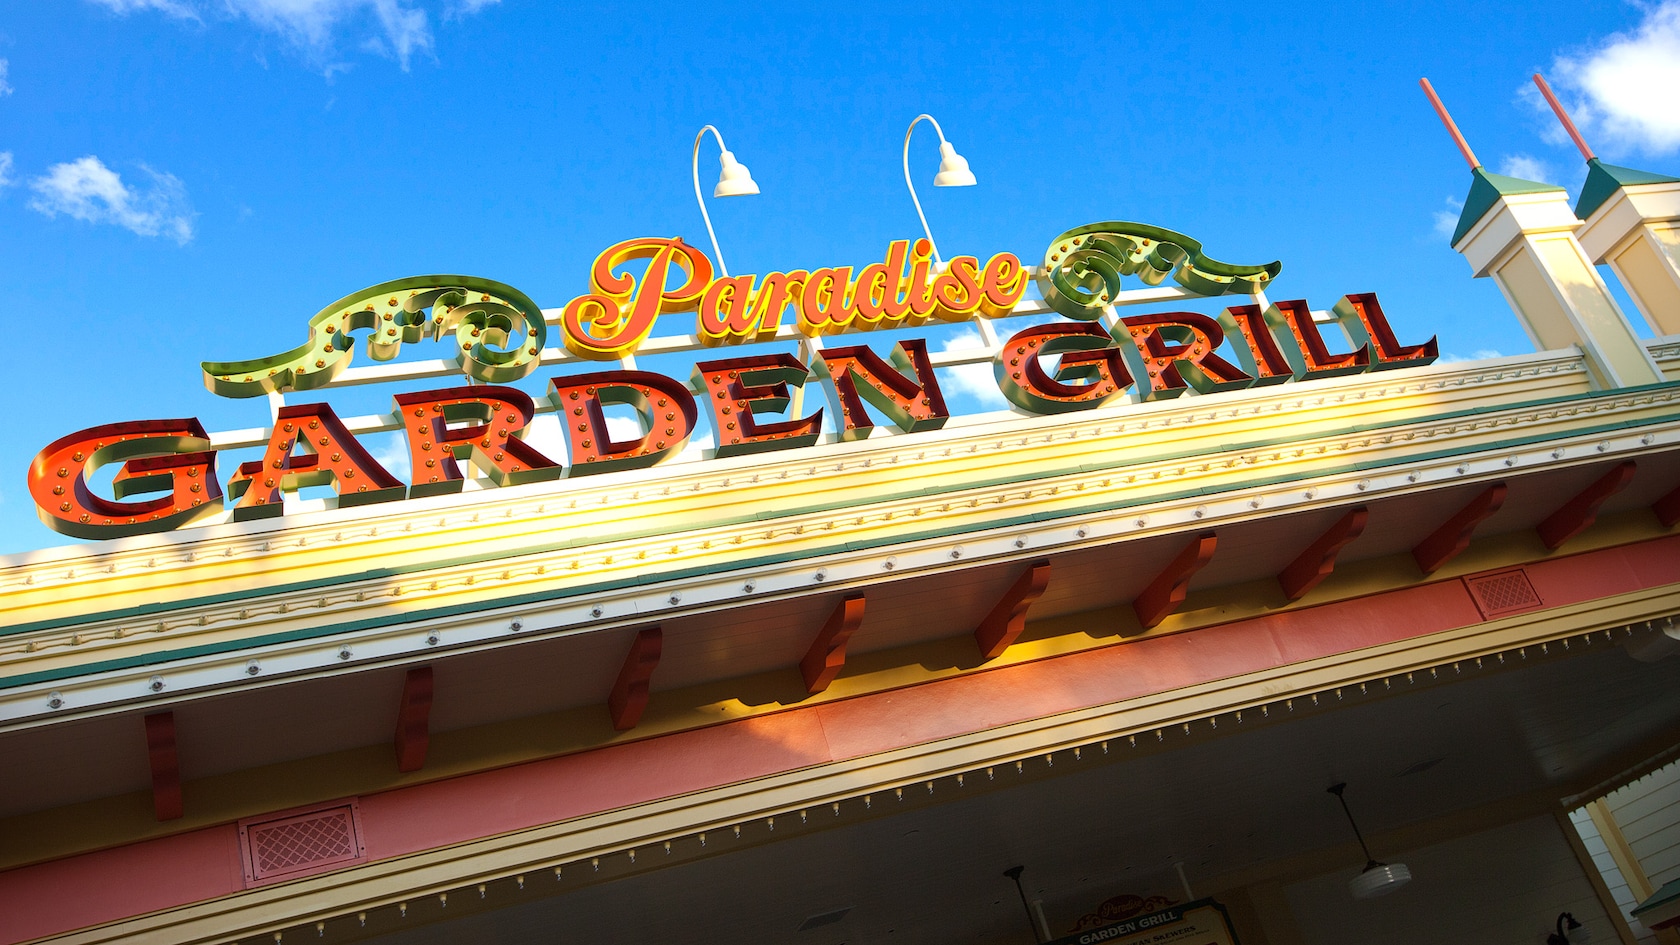 Sign for Paradise Garden Grill, a Disney California Adventure Mediterranean restaurant